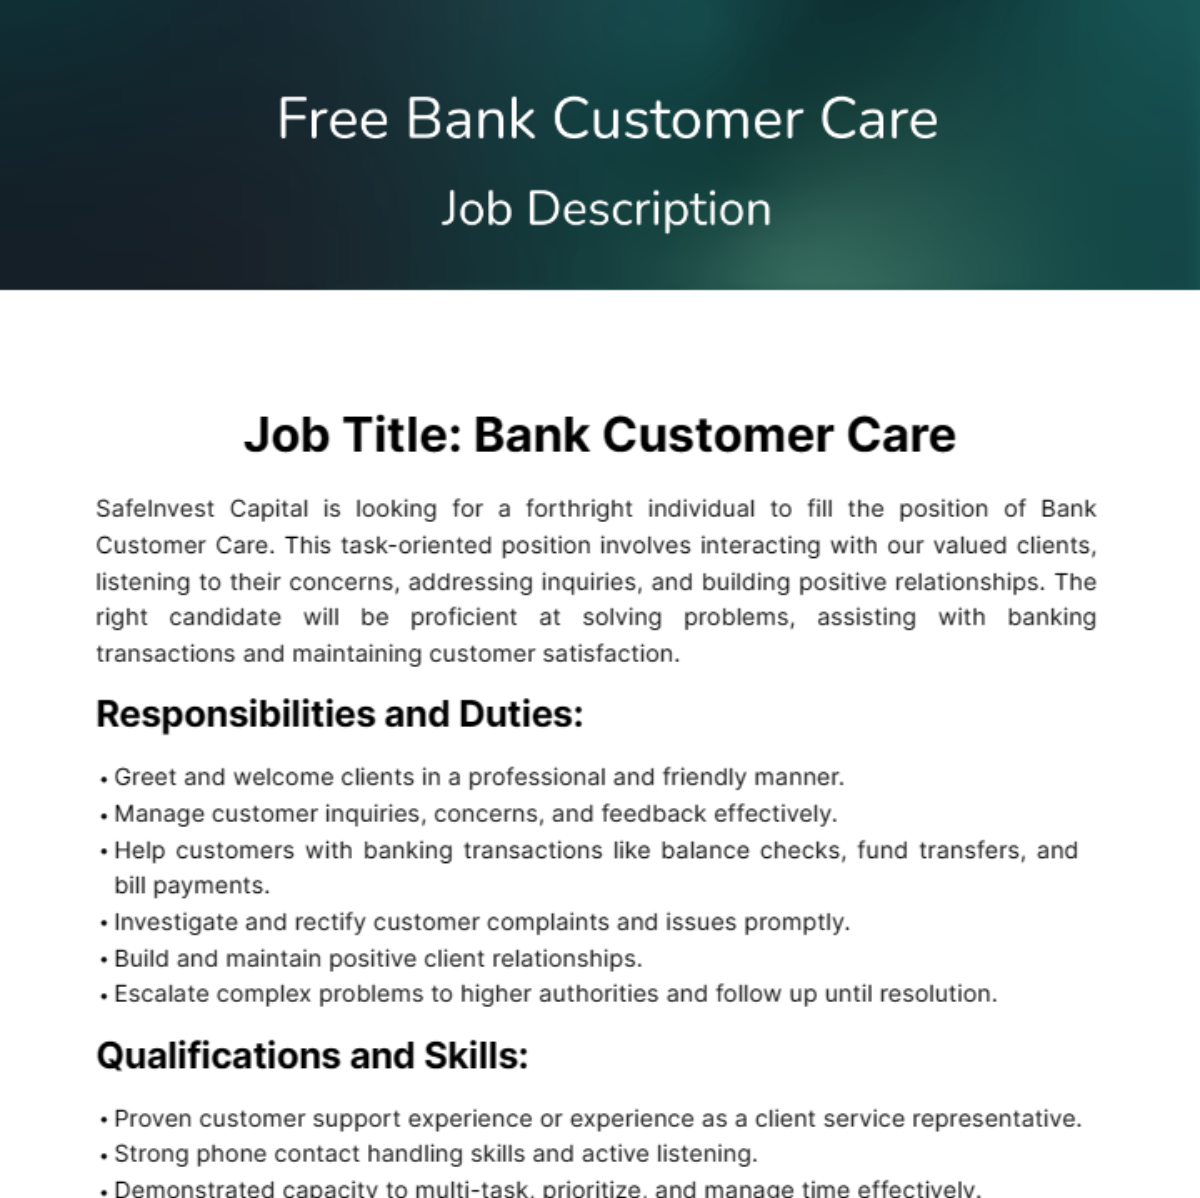 Bank Customer Care Job Description Template